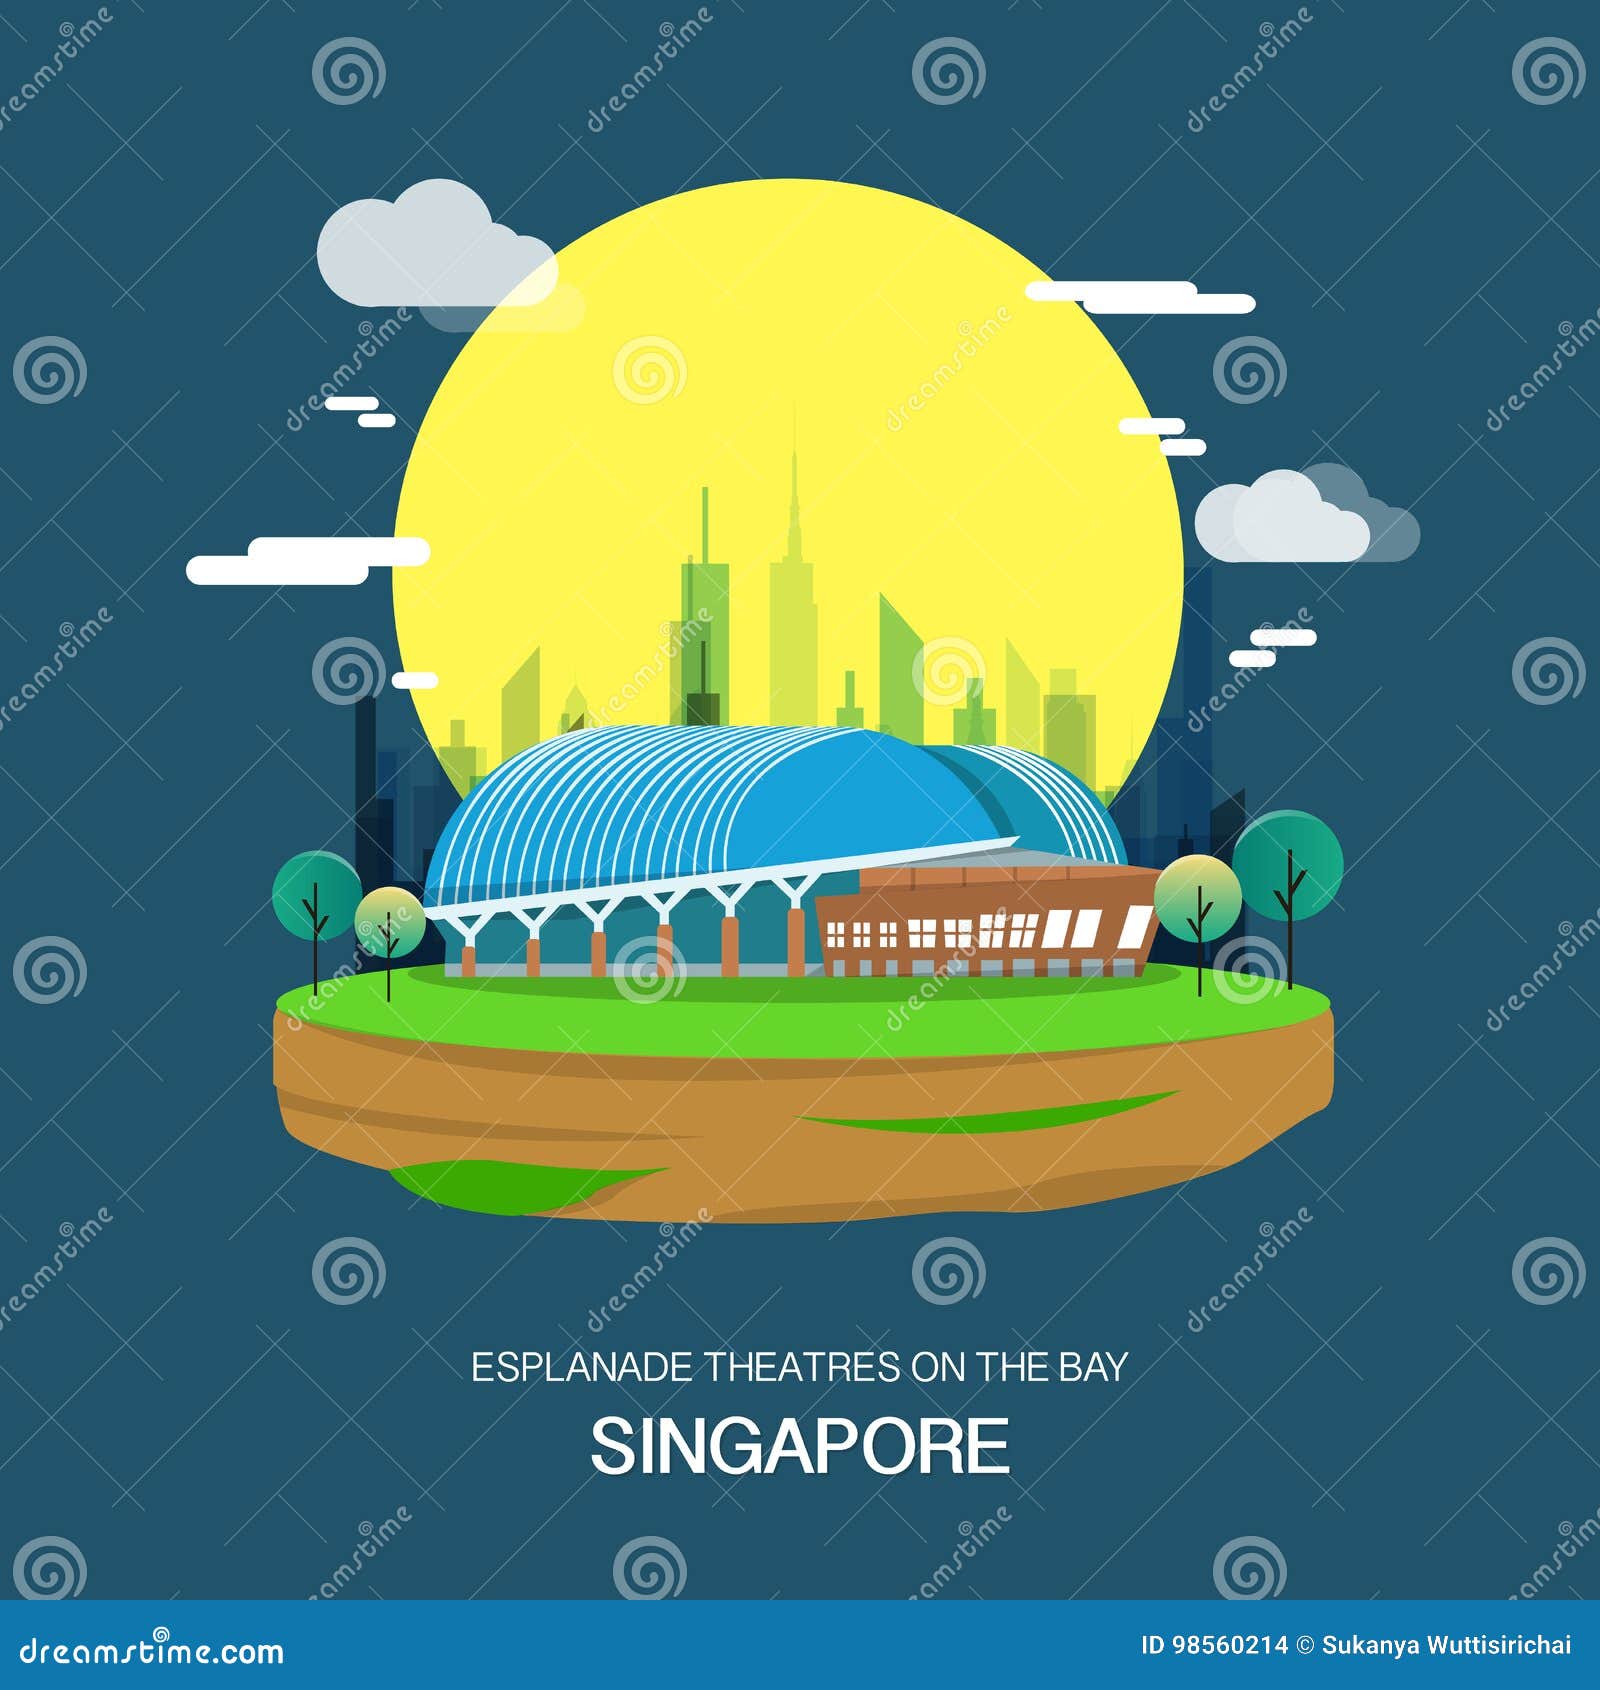 esplanade theatre on the bay landmrak in singapore 